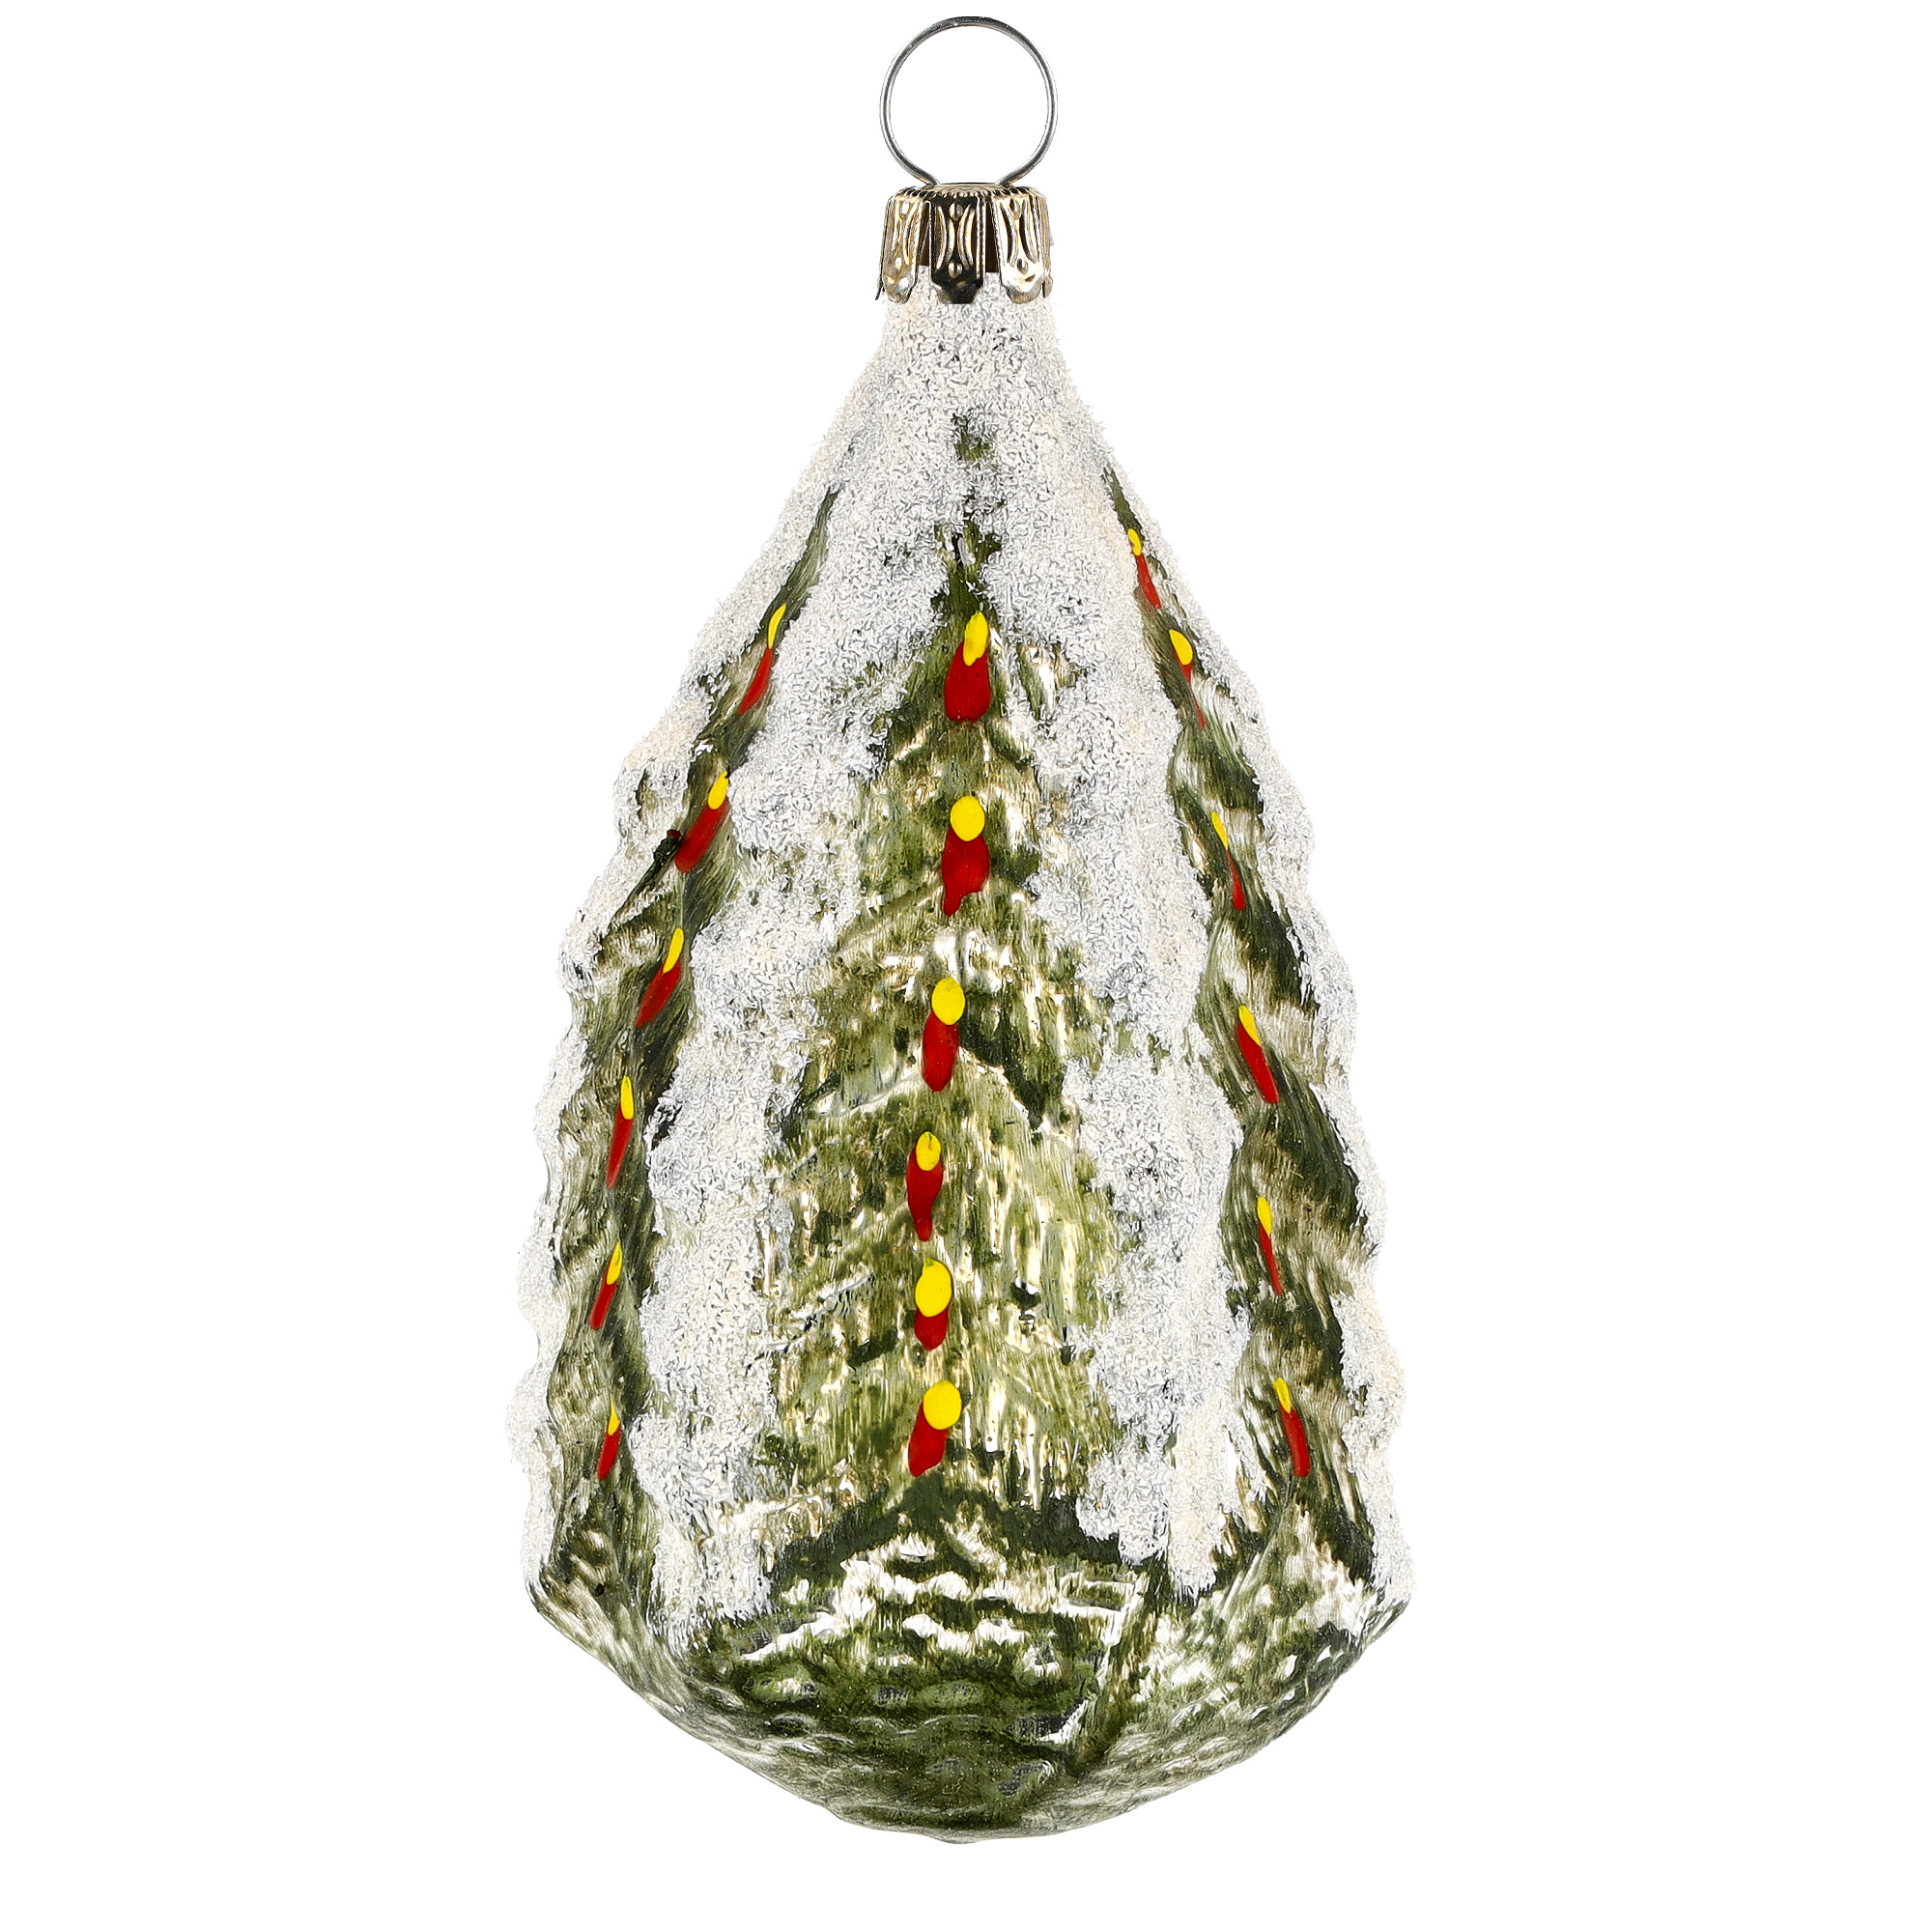 Retro Vintage style Christmas Glass Ornament - Christmas tree